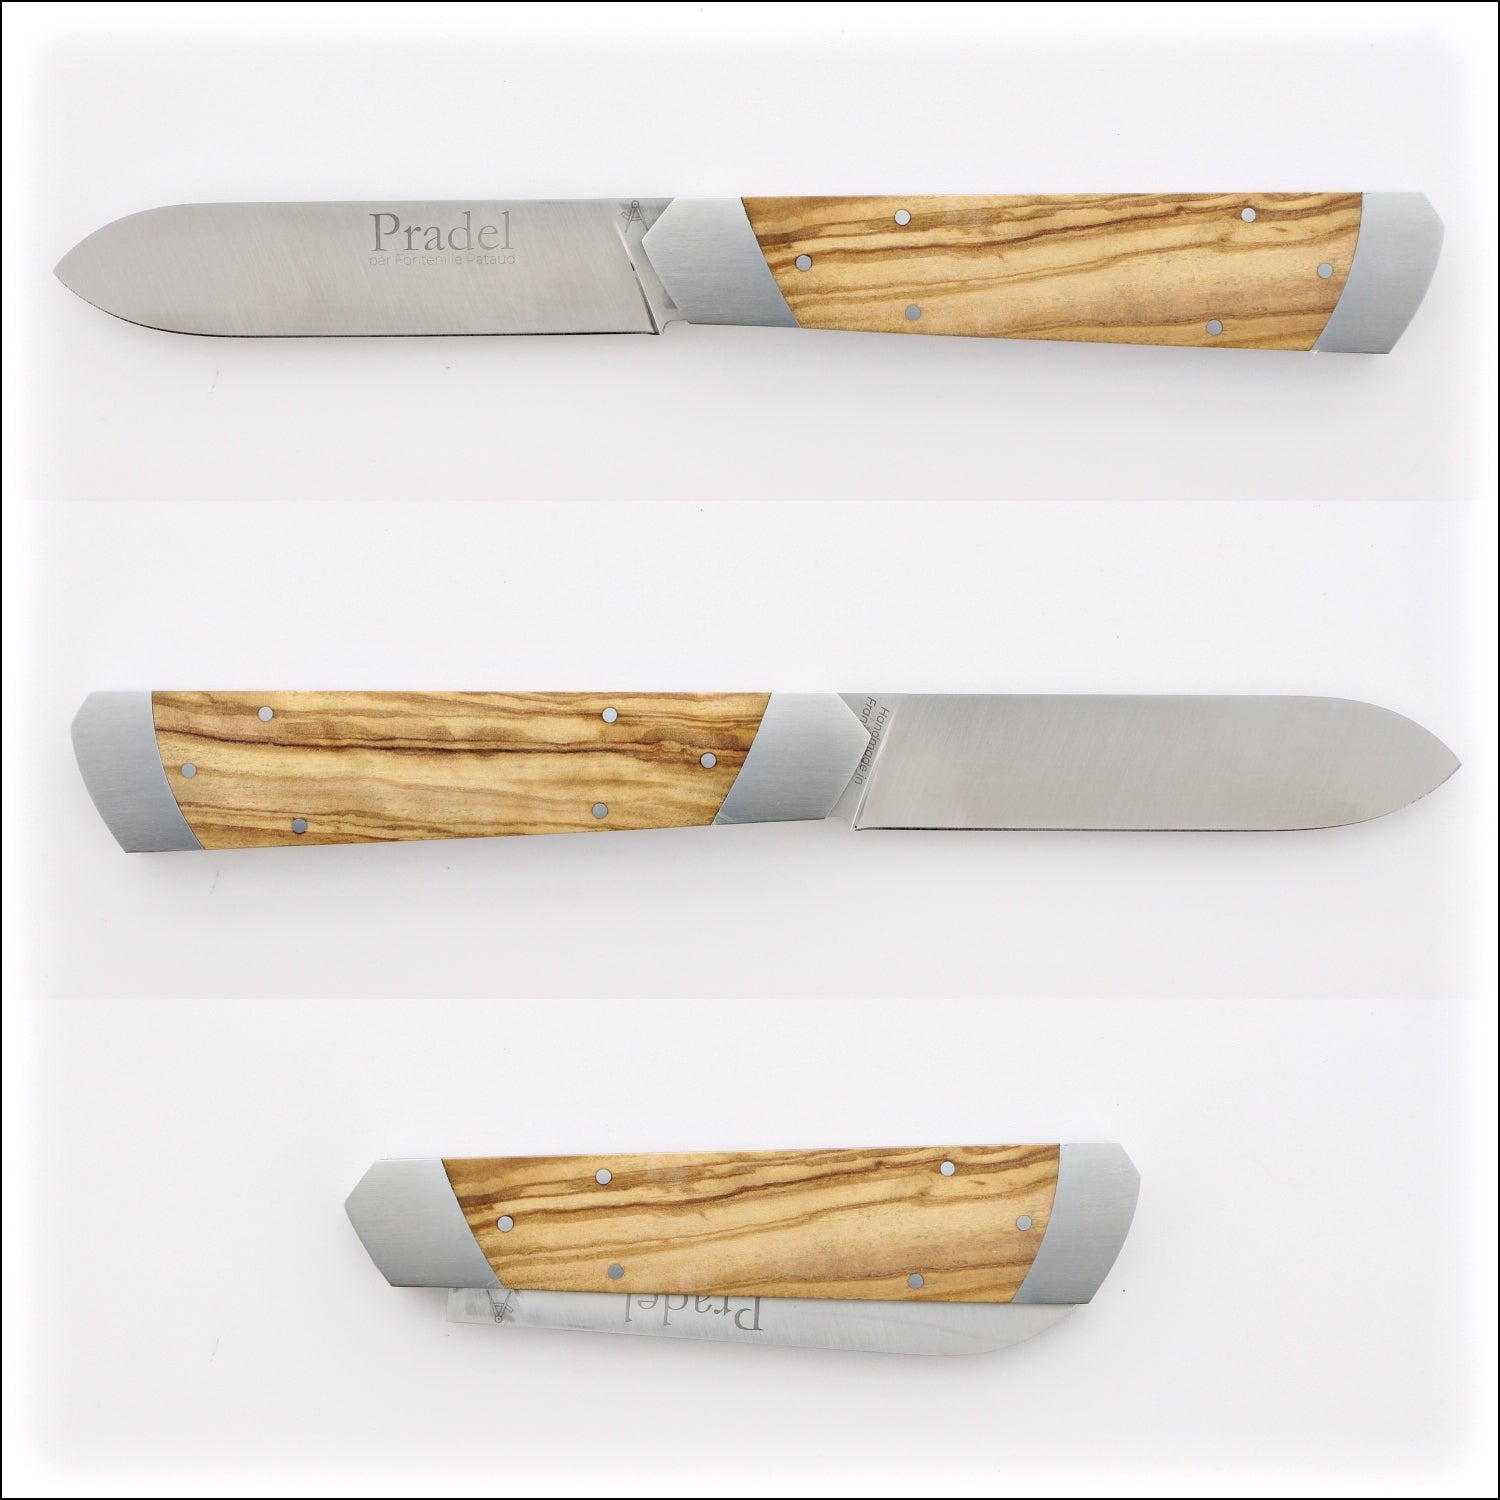 Pradel Folding Knife Olive Wood Handle & Lock-Back by Fontenille Pataud